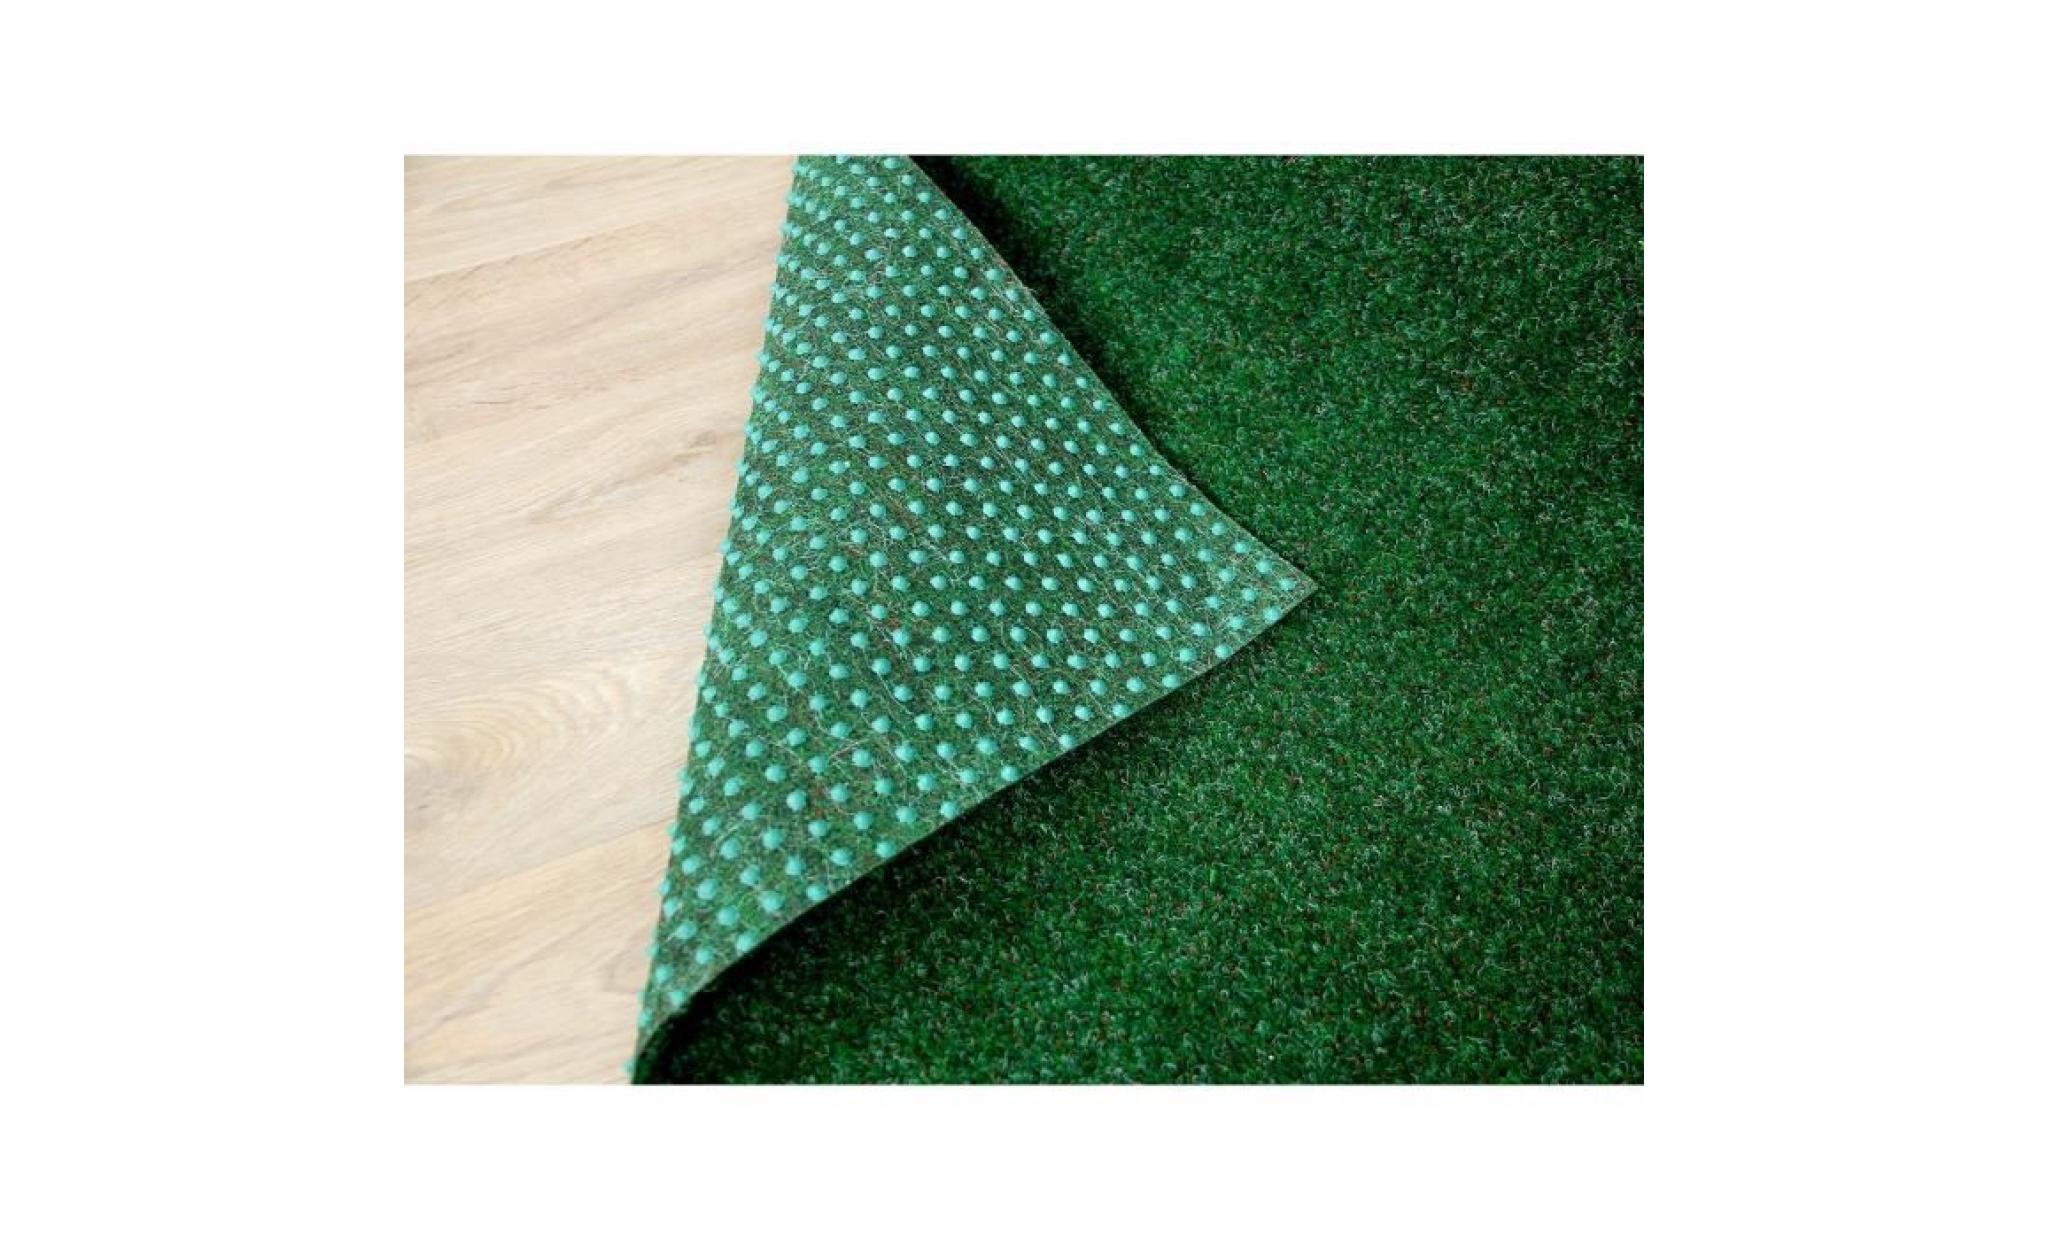 kingston   tapis type gazon artificiel – pour jardin, terrasse, balcon   anthracite [200x400 cm] pas cher